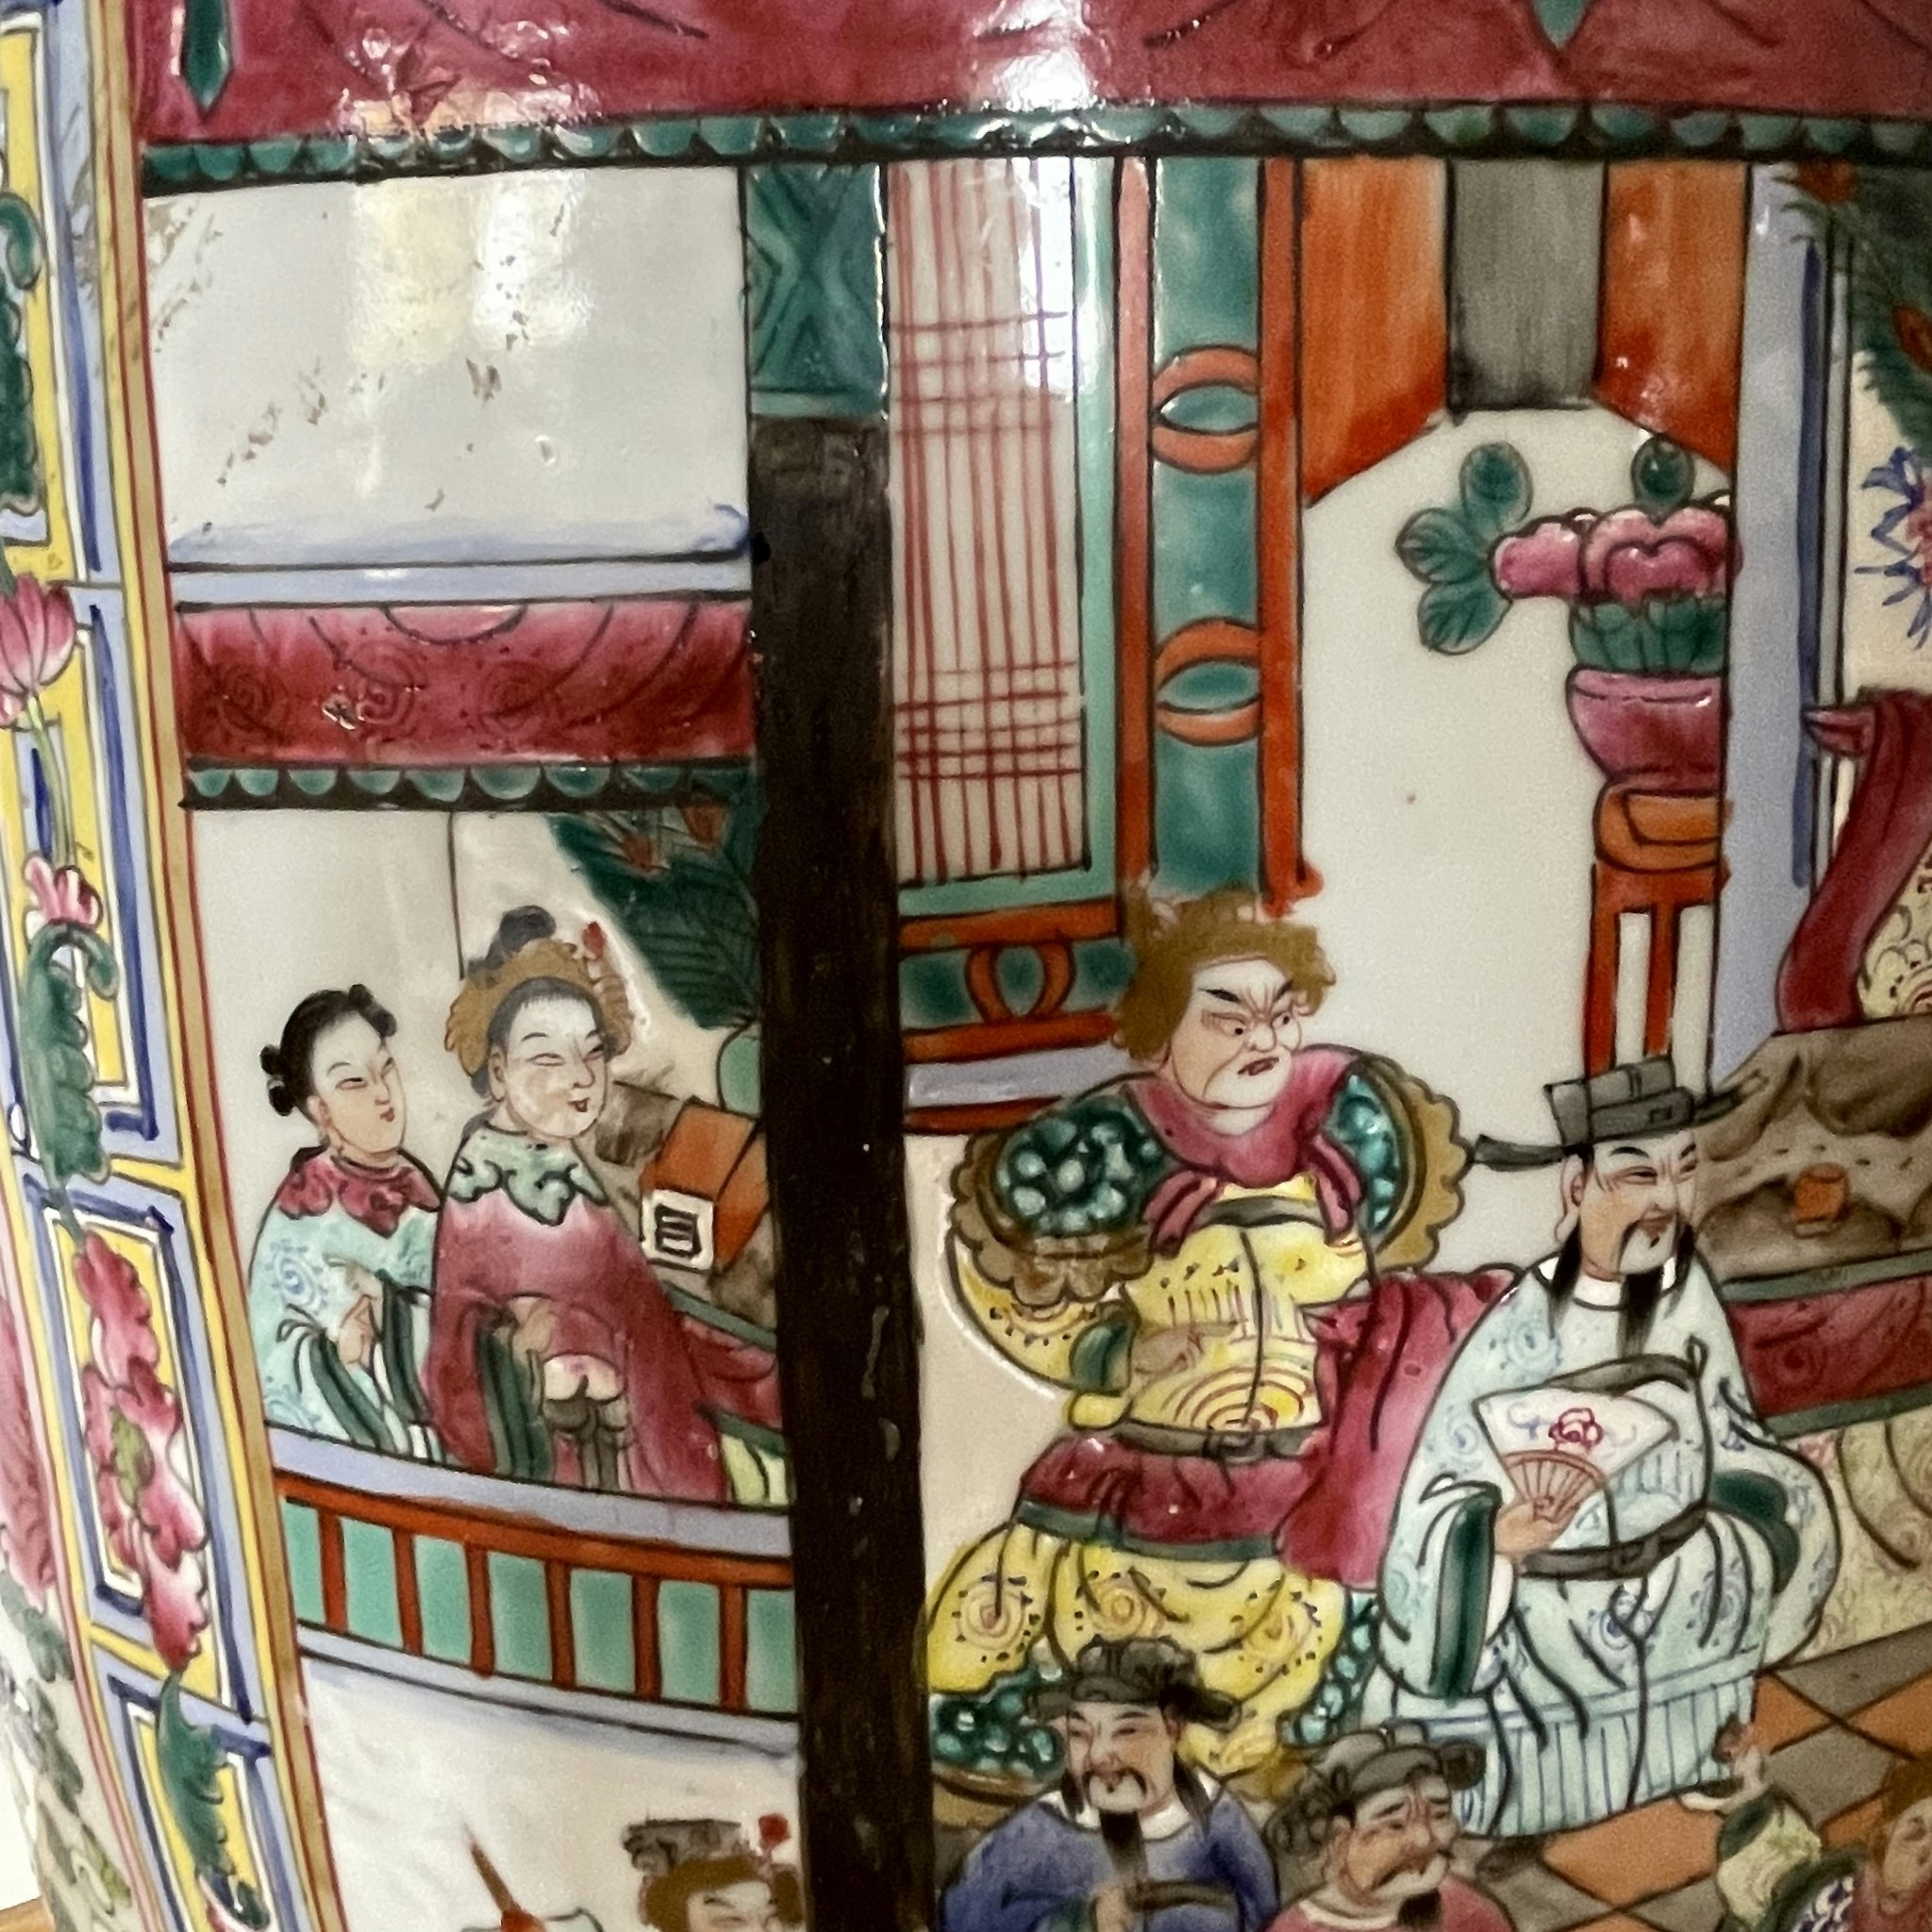 Chinese Antique Porcelain Palace Vase Late Qing Dynasty  #1919